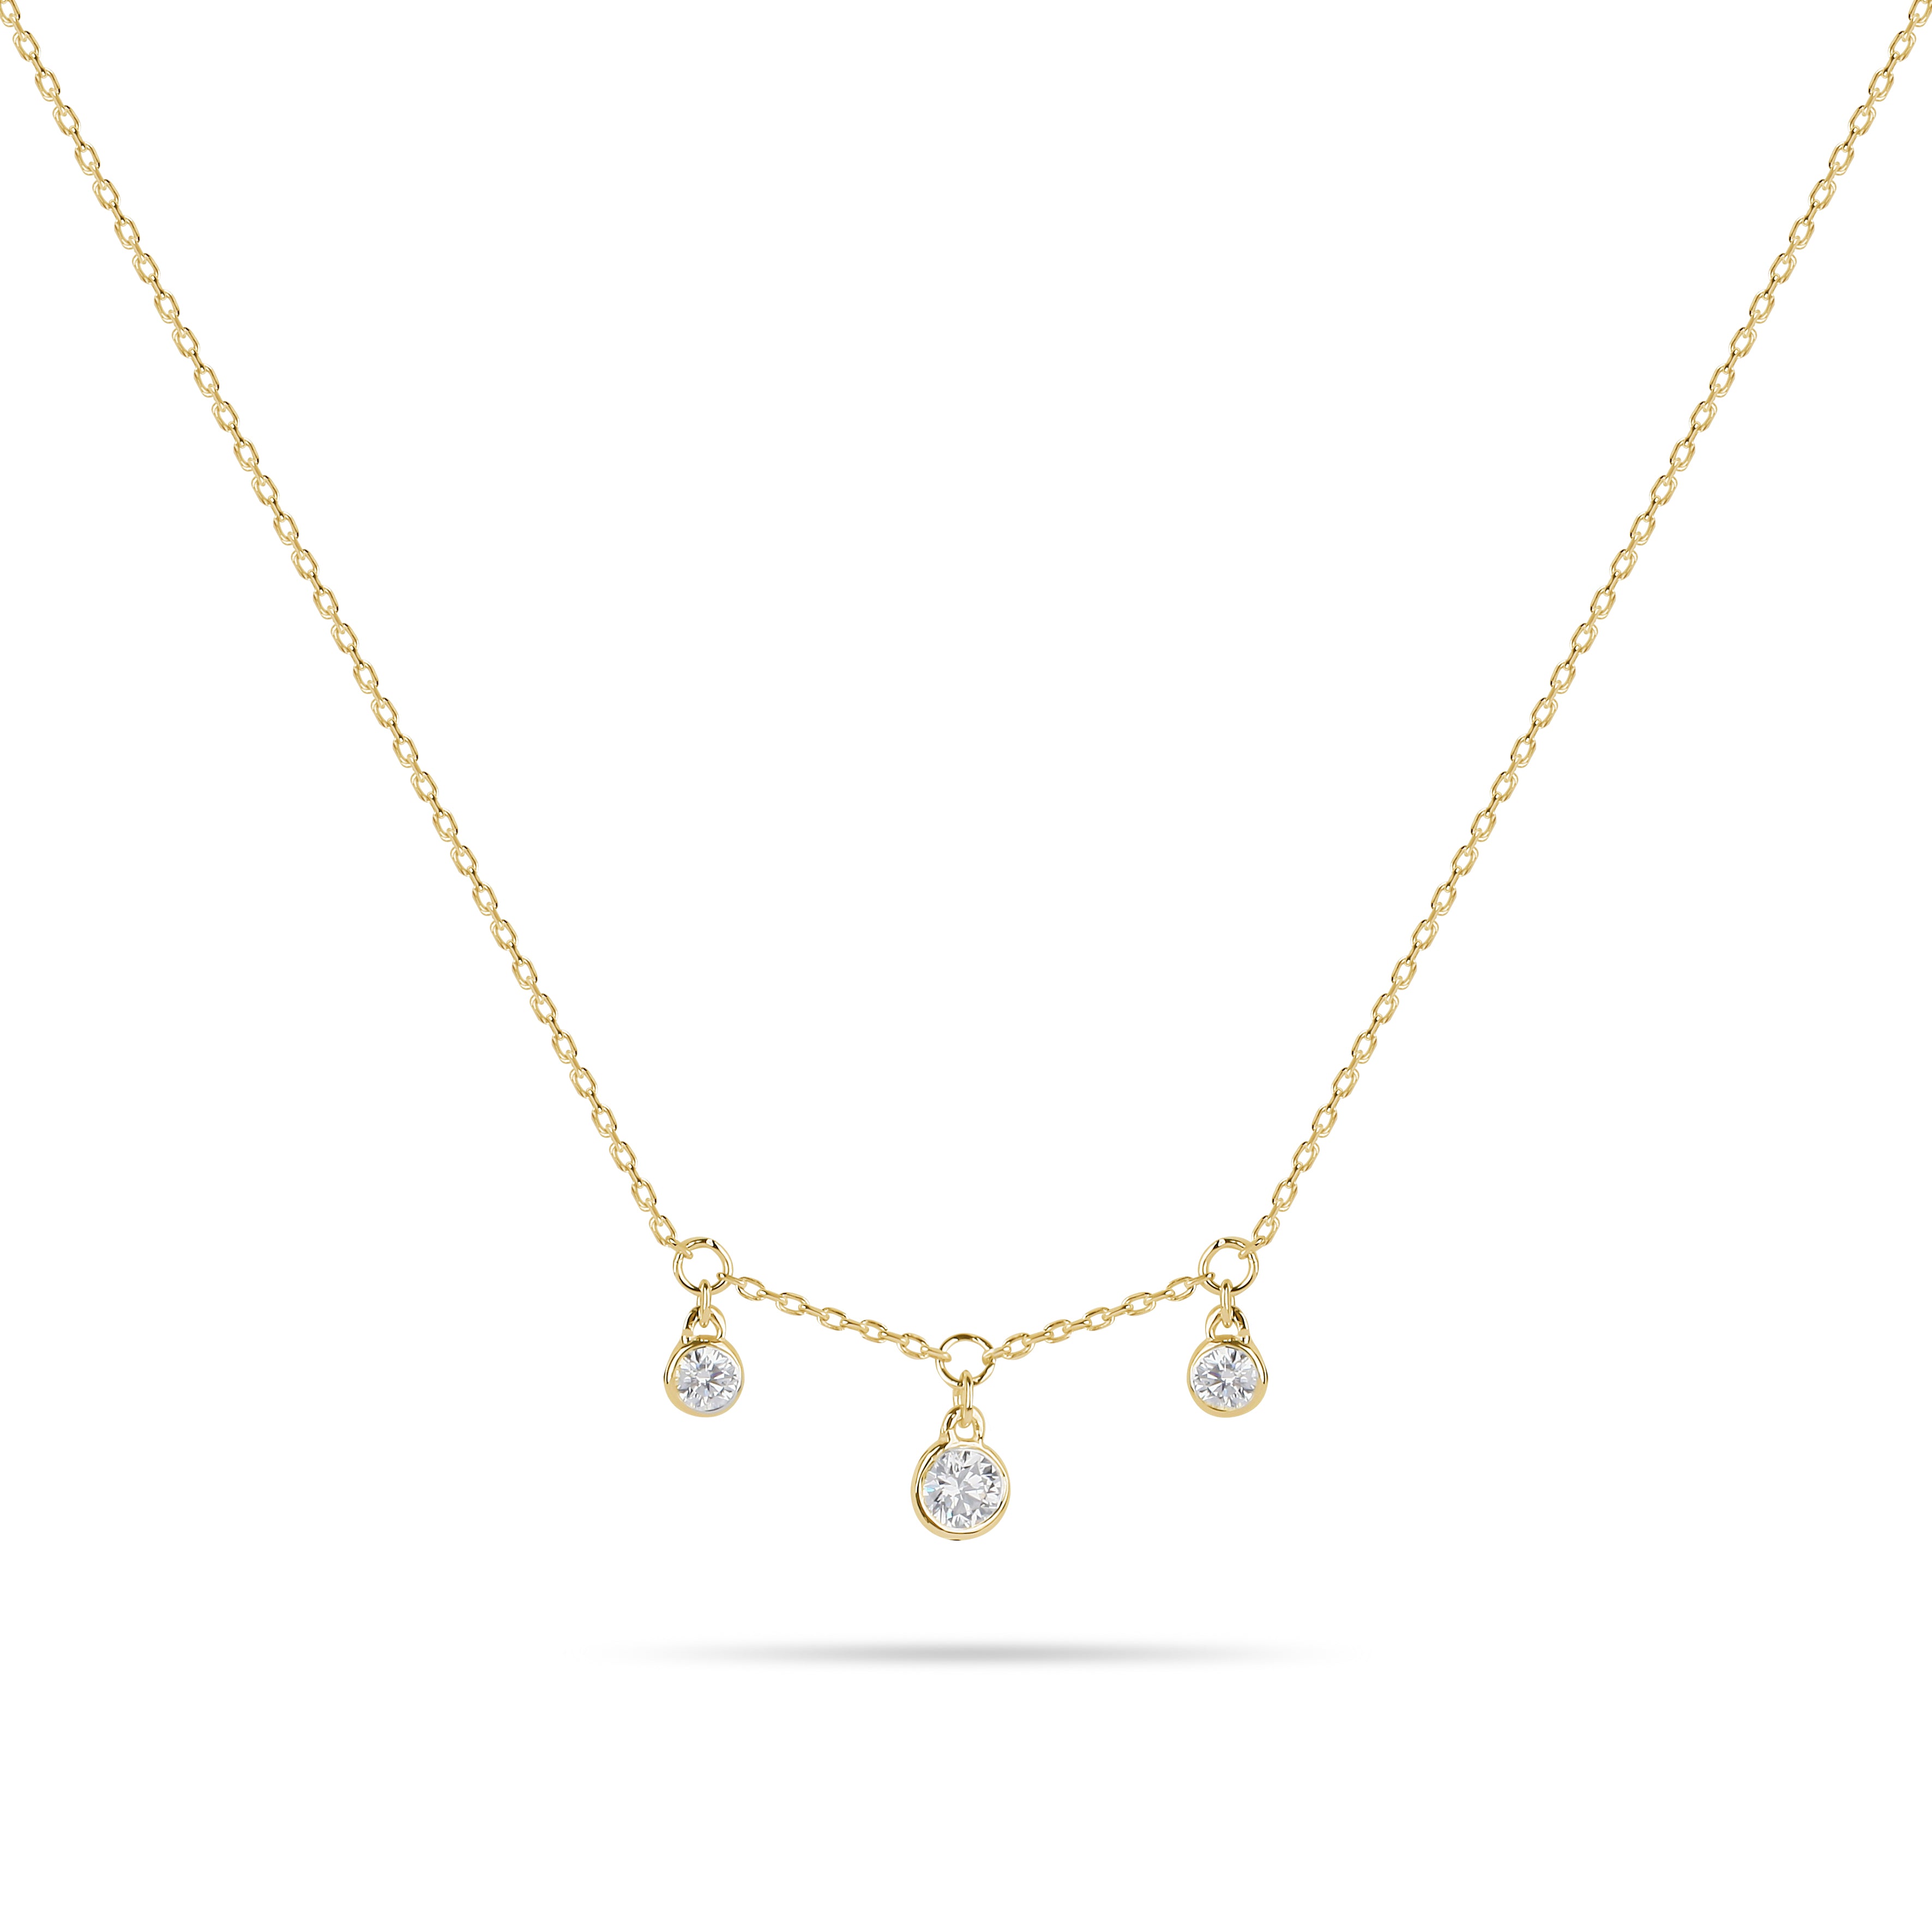 Triple Diamond Chain Necklace